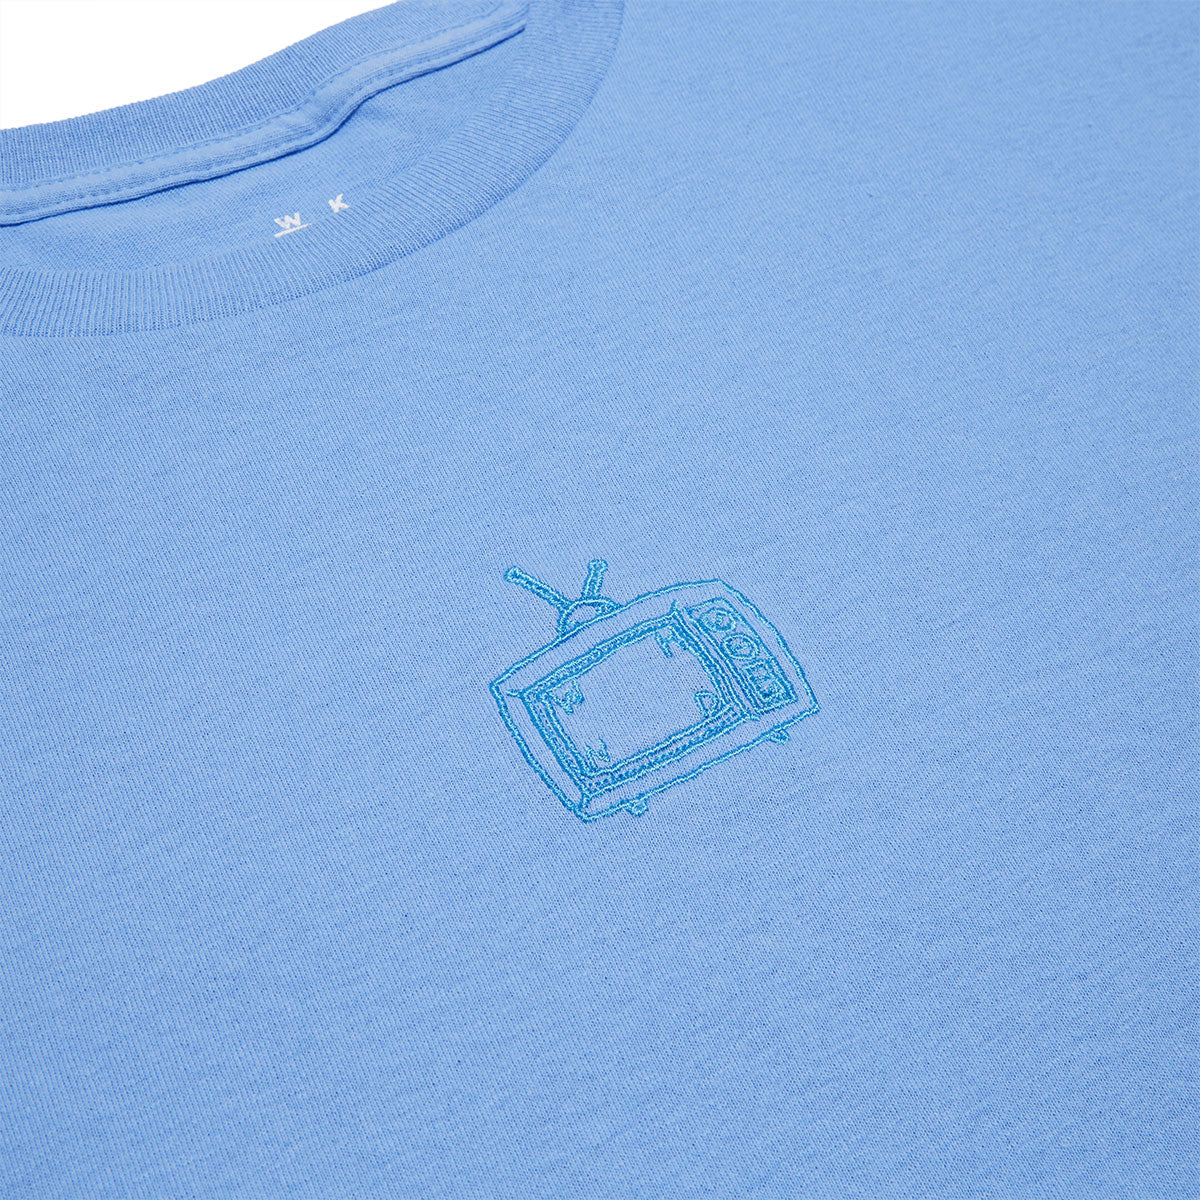 WKND Tv Logo Embroidery T-Shirt - C.Blue image 2